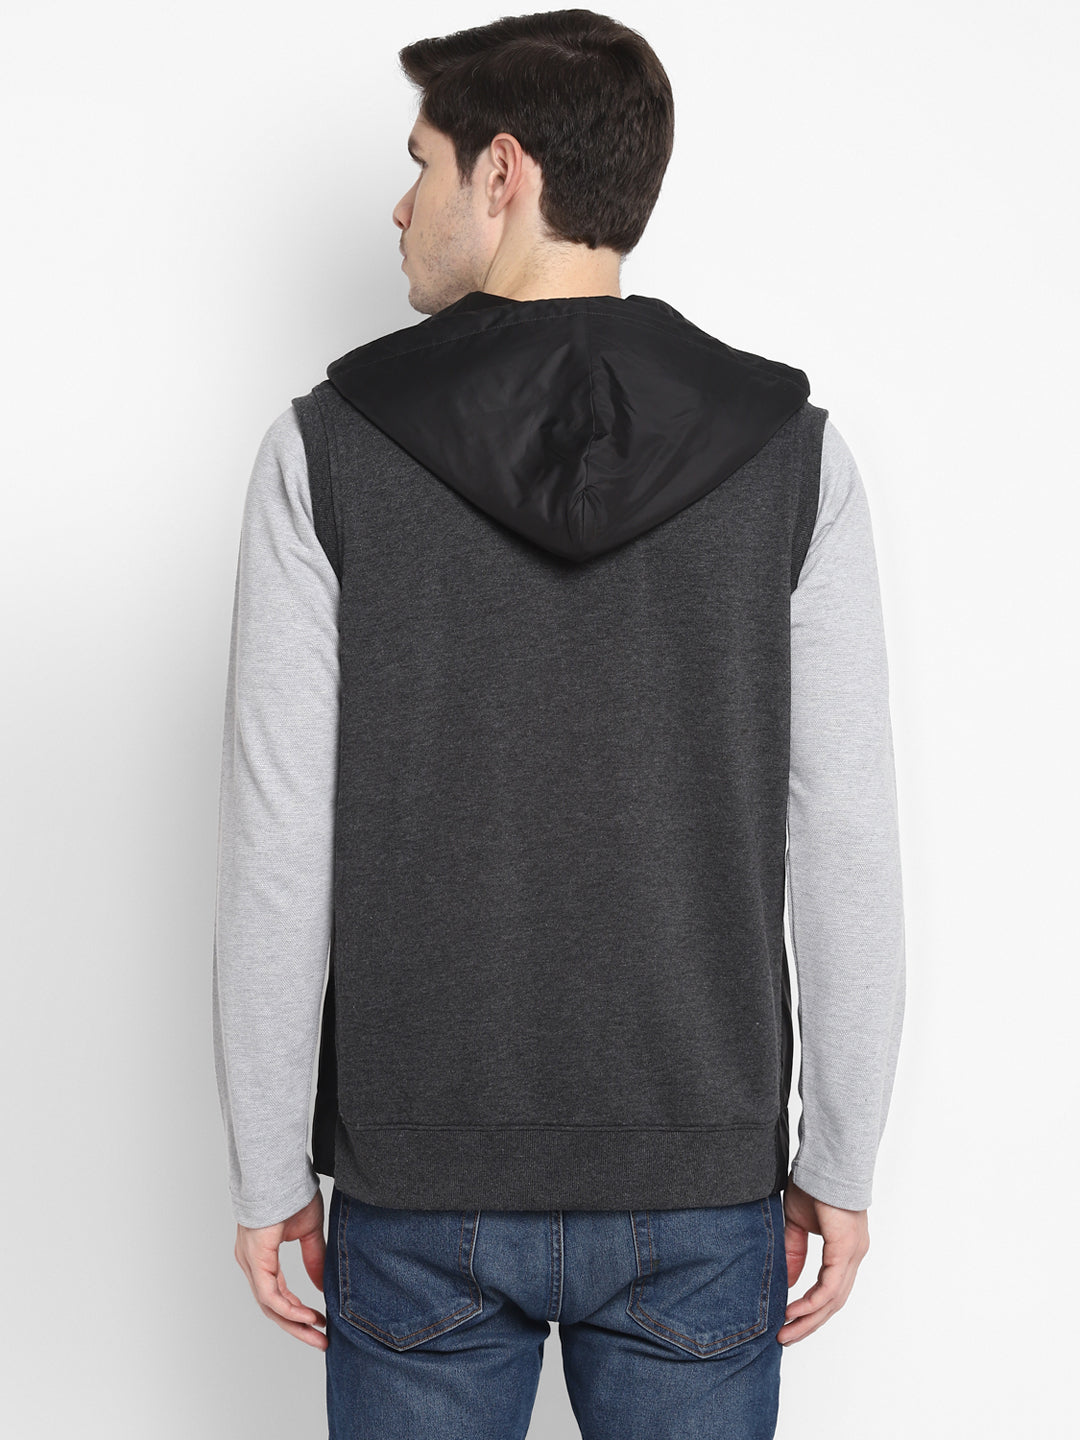 Solid Dark Grey Sleeveless Hooded Sweatshirt for Men